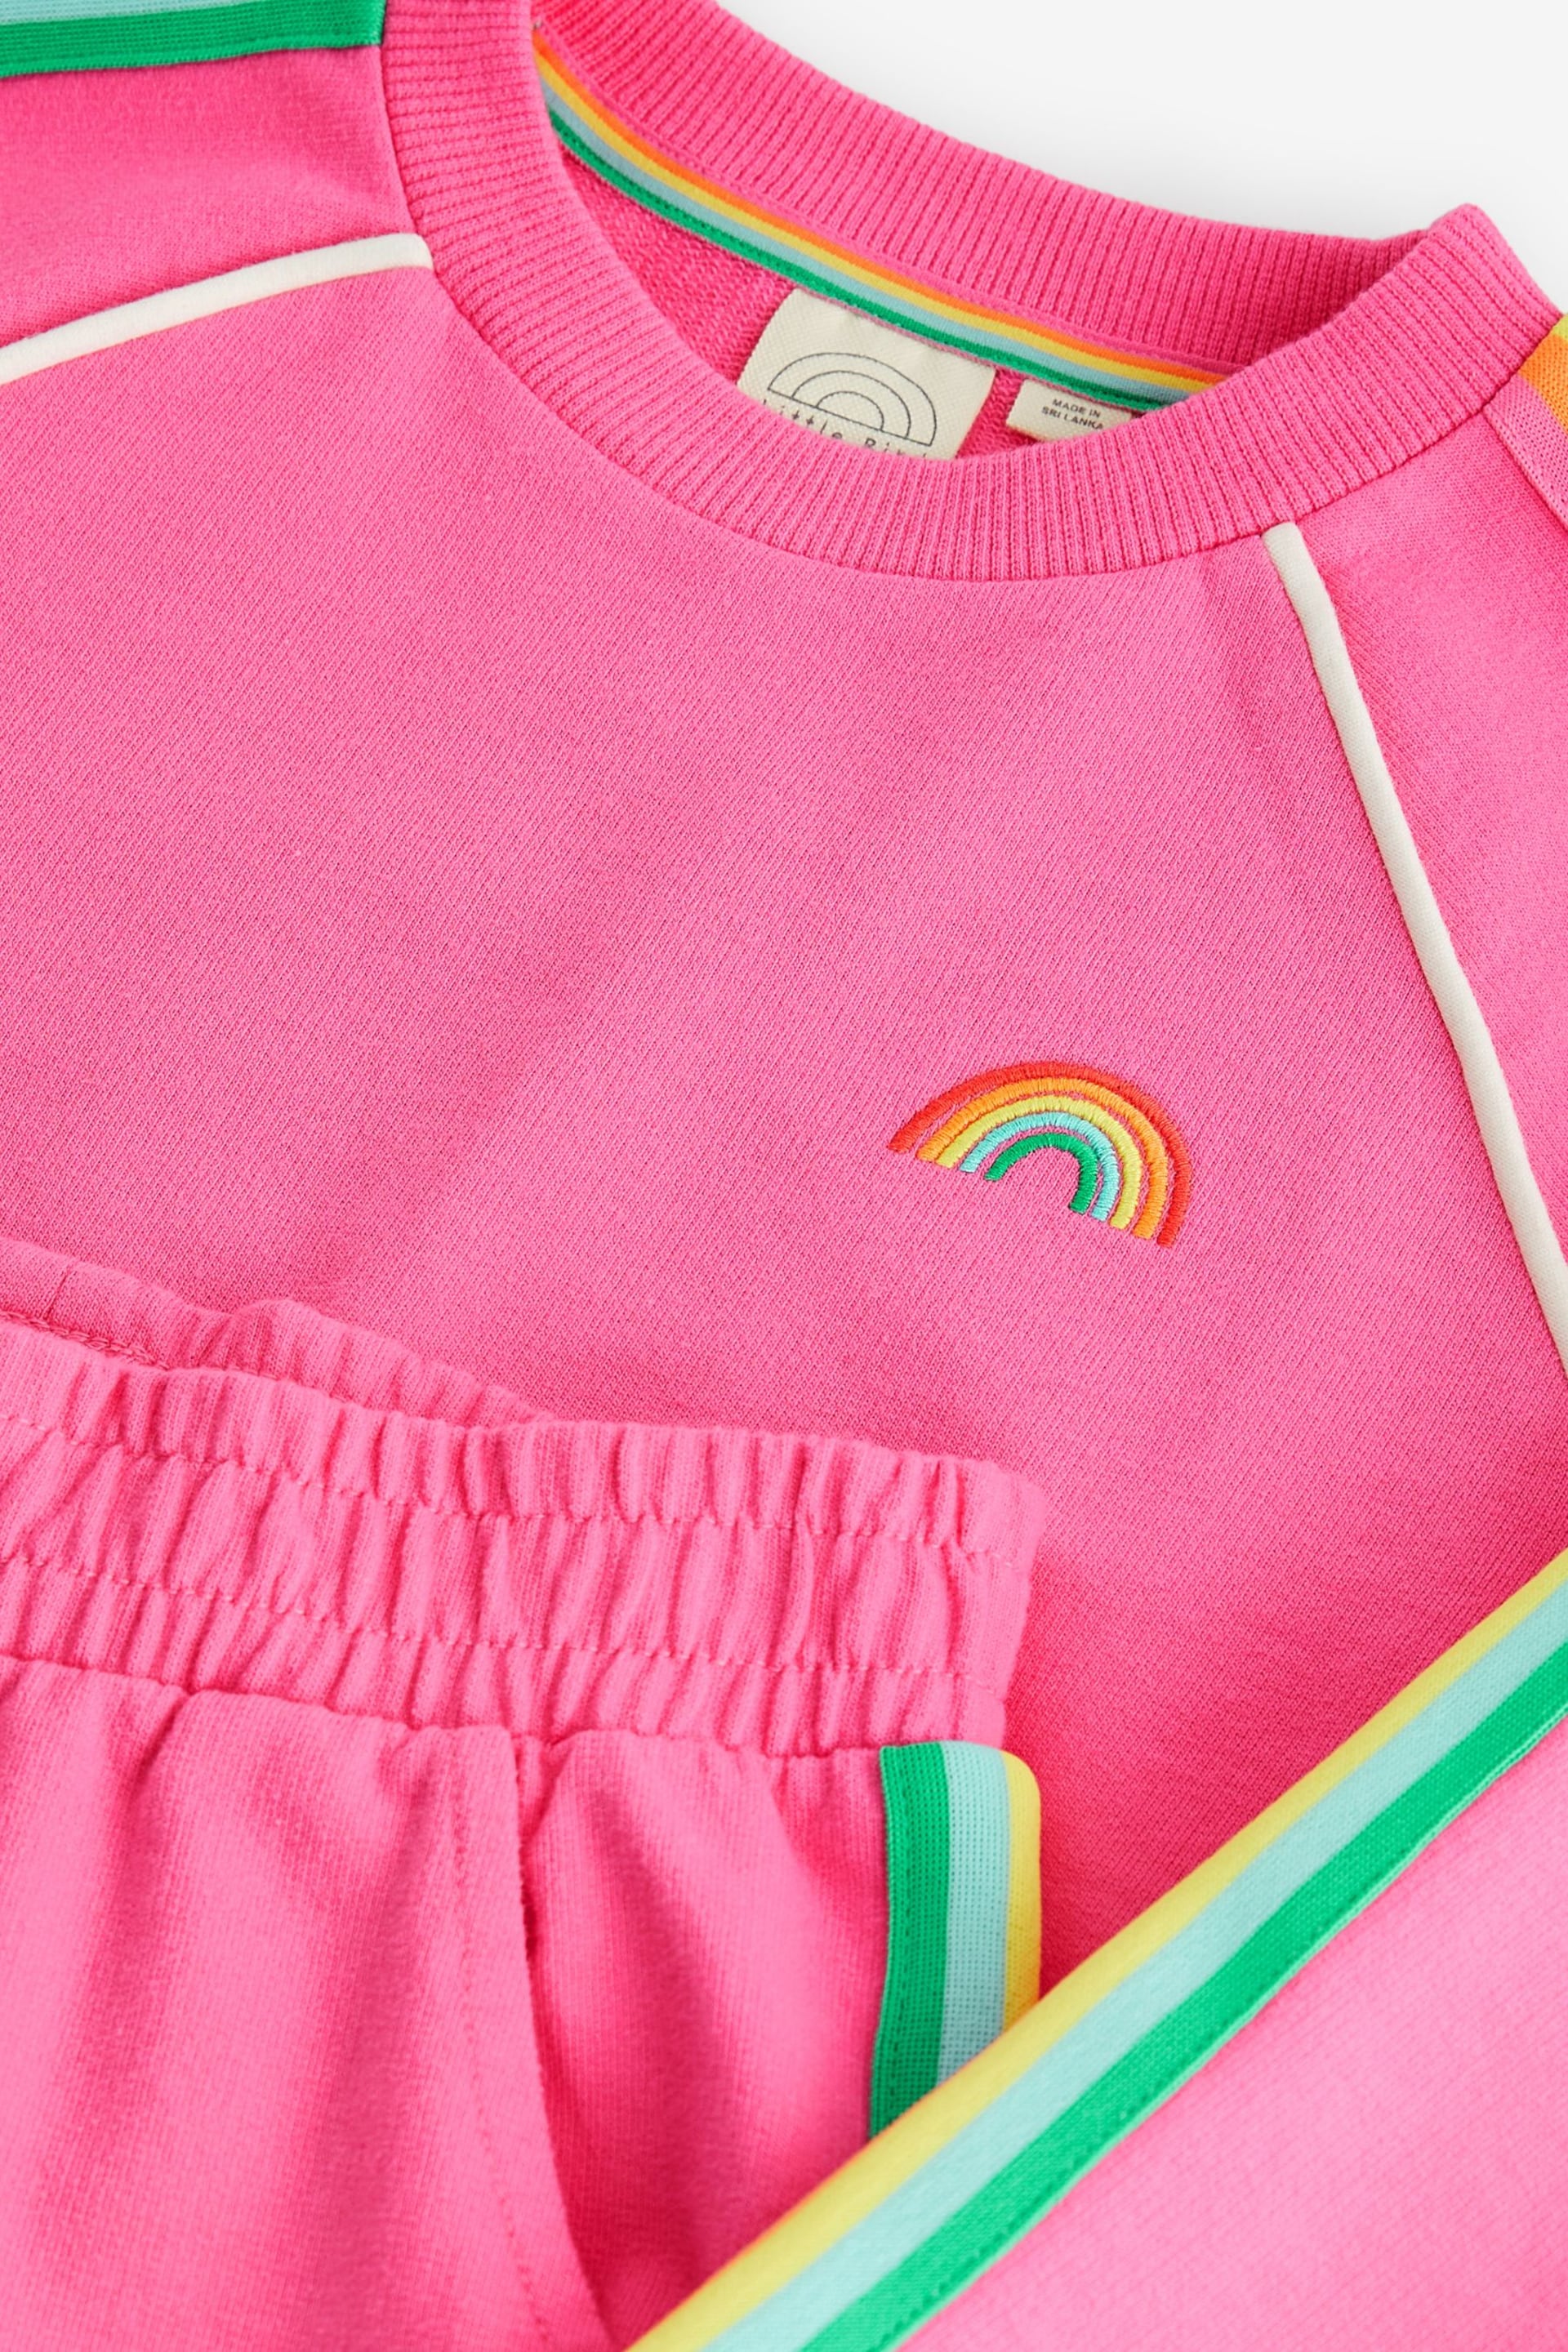 Little Bird by Jools Oliver Pink Rainbow Sweatshirt and Jogger Set - Image 12 of 12